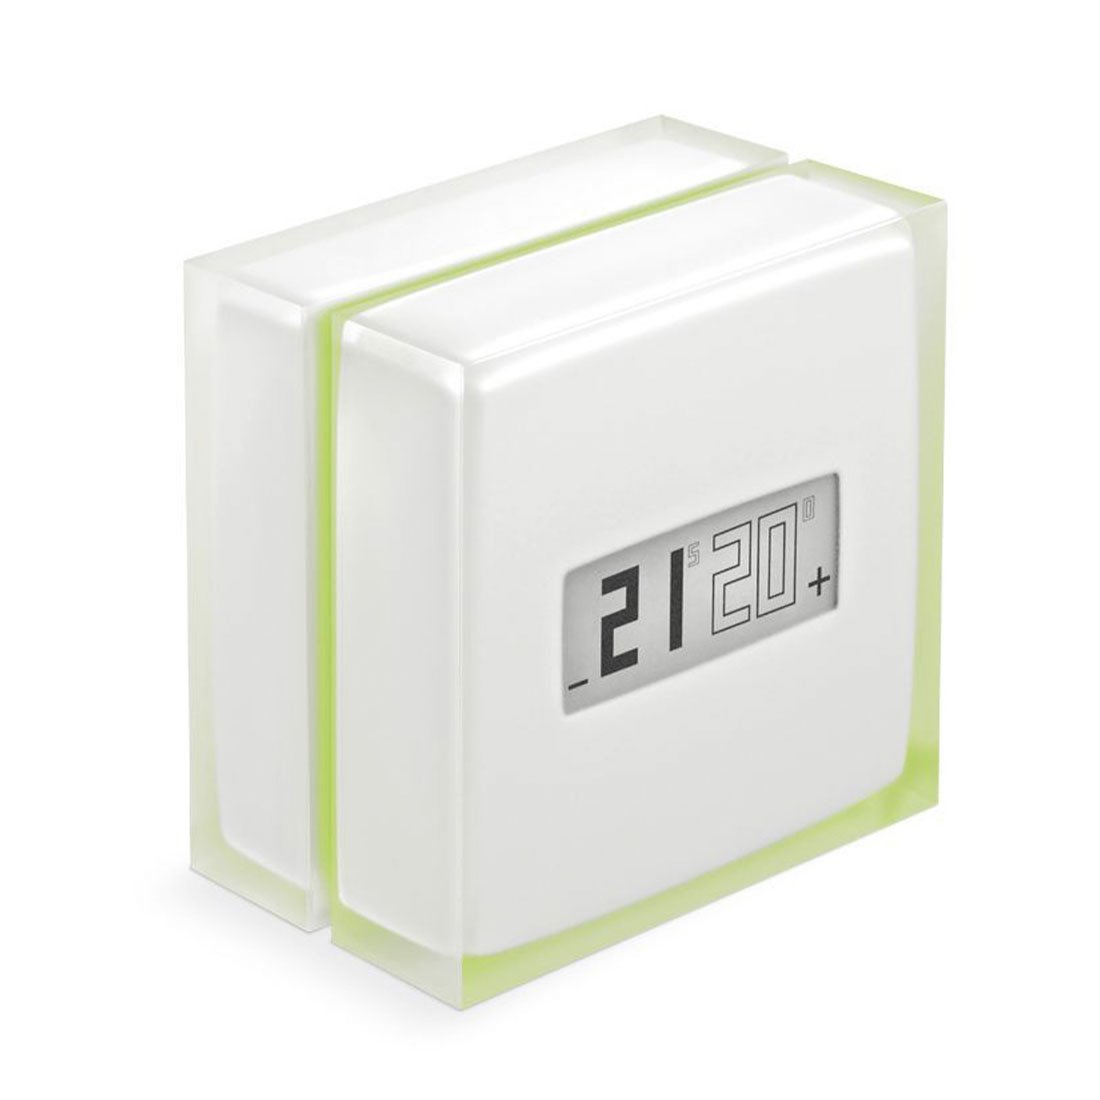 Netatmo Smart Modulating Thermostat - White